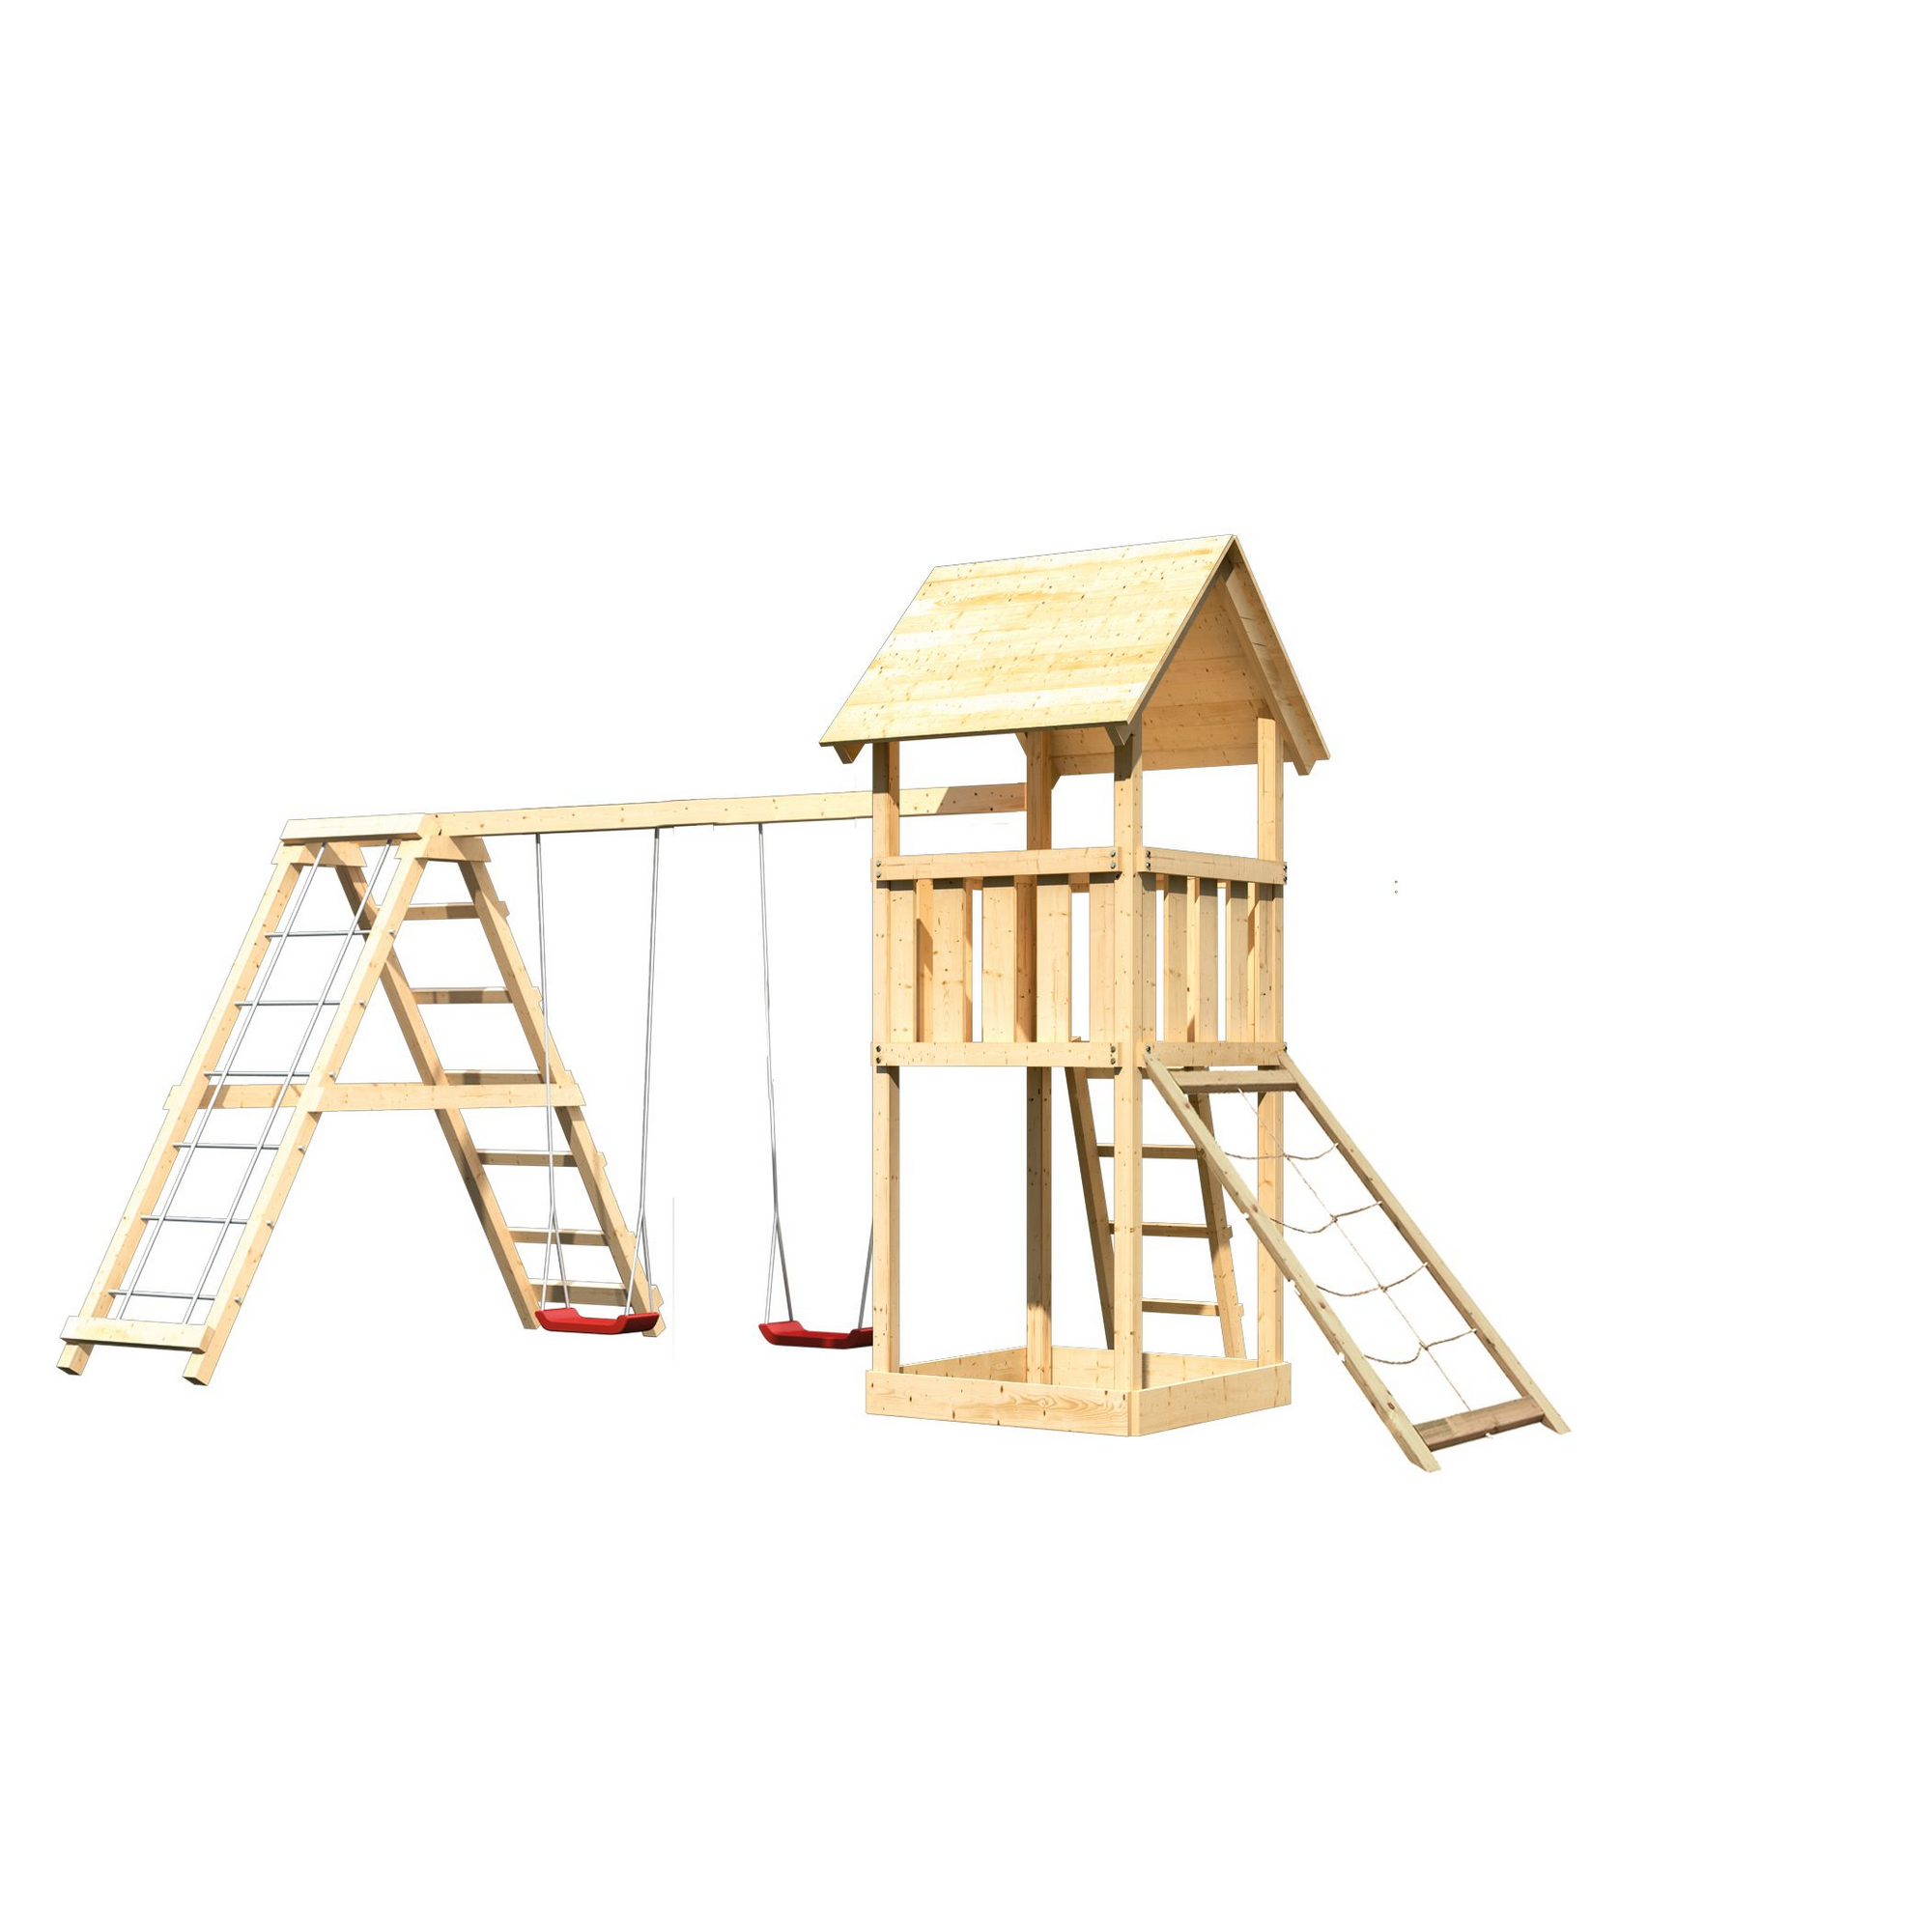 Kinderspielturm 'Lotti' naturbelassene nordische Fichte 107 x 291 x 107 cm + product picture